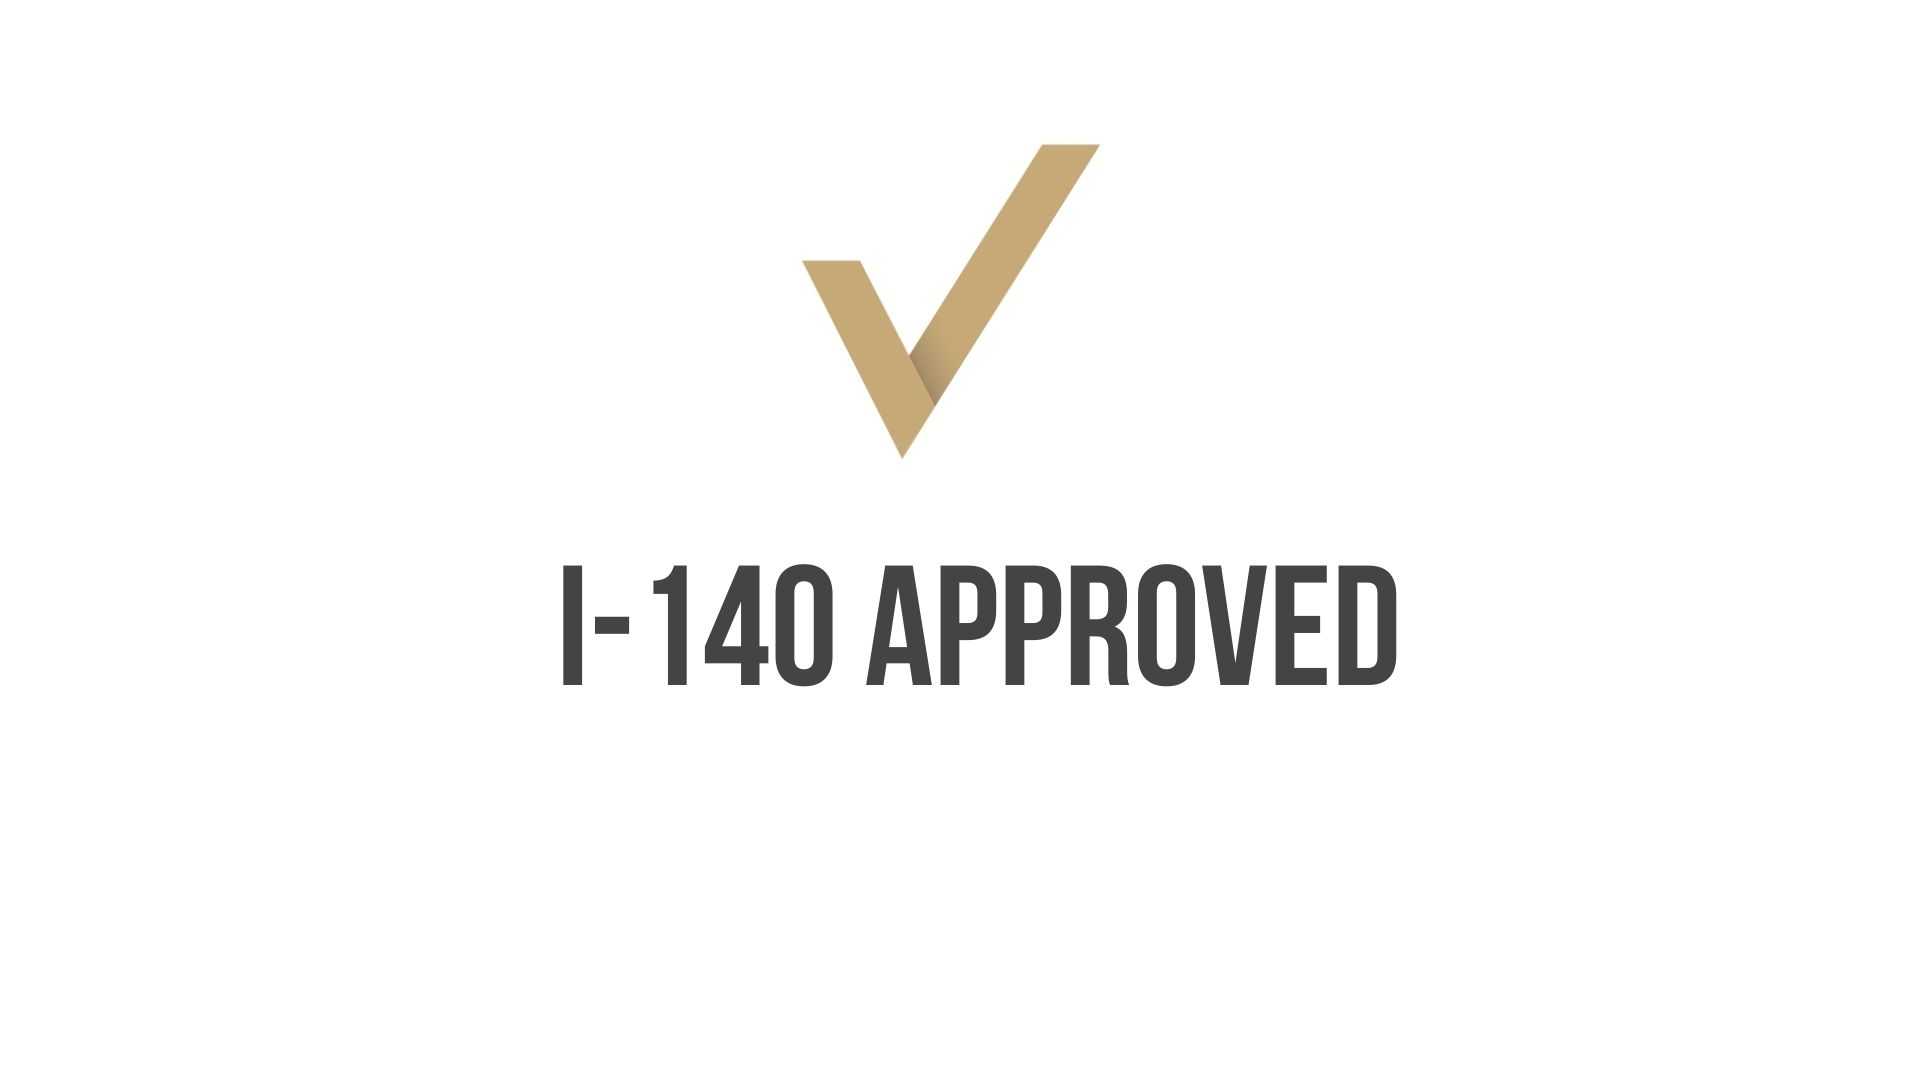 I-140 Approval Based on PERM for Elementary School Teacher